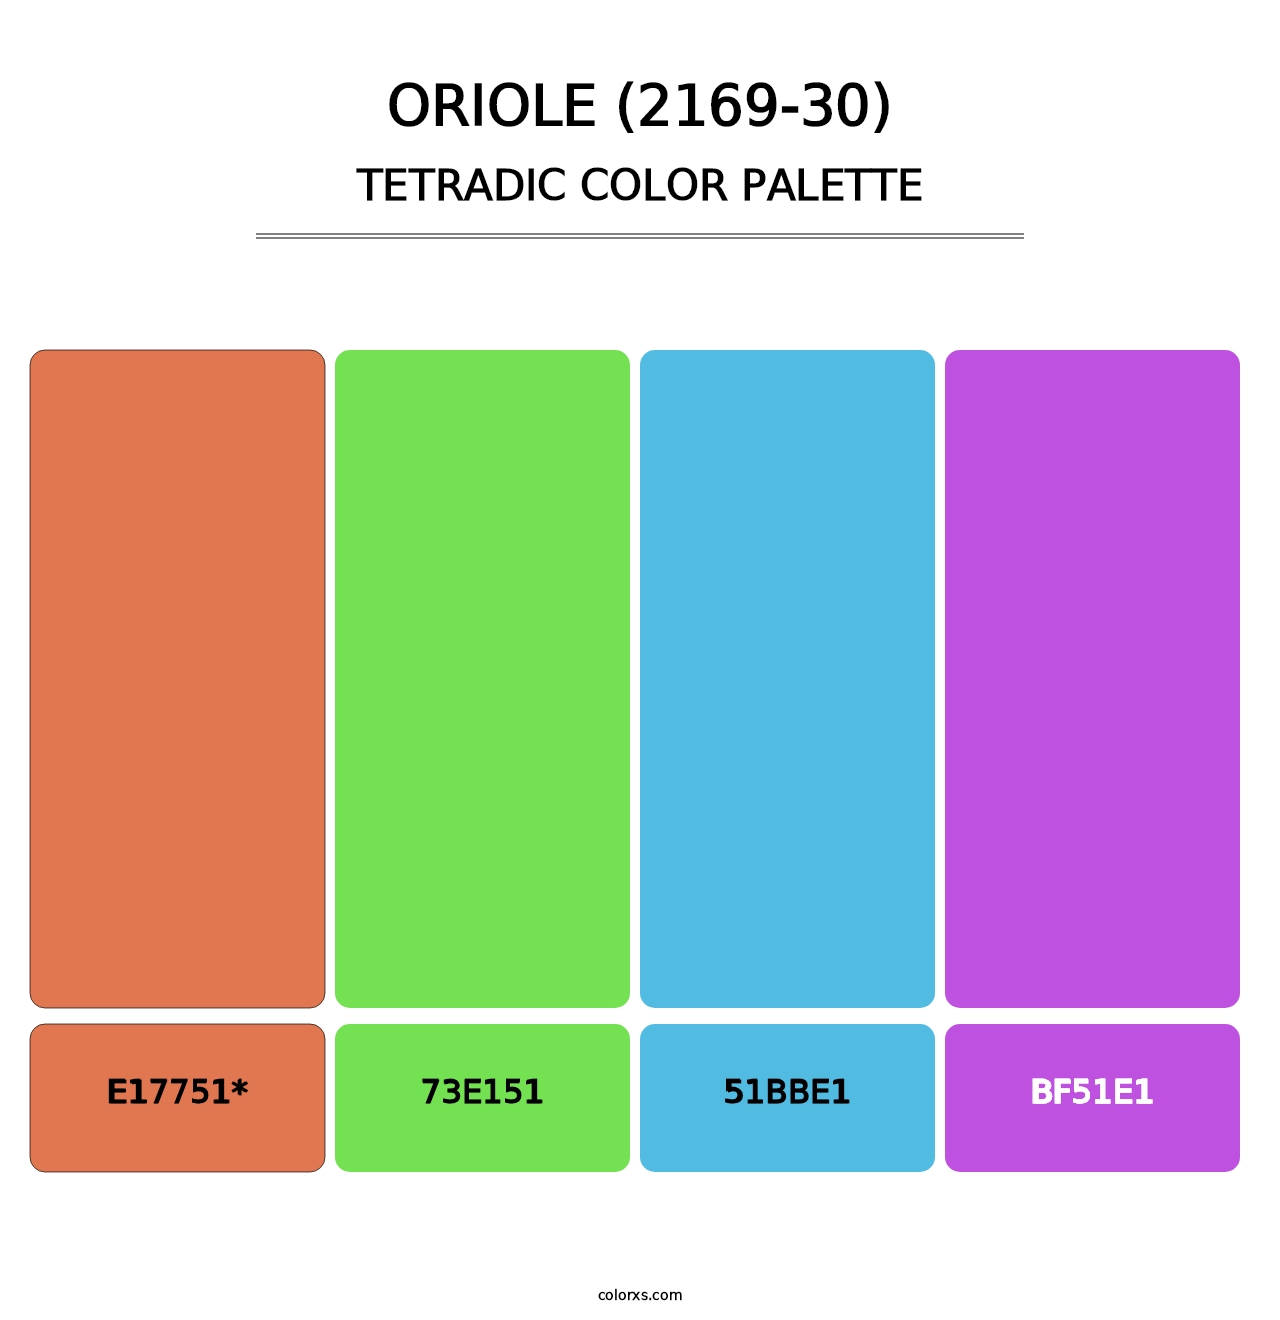 Oriole (2169-30) - Tetradic Color Palette